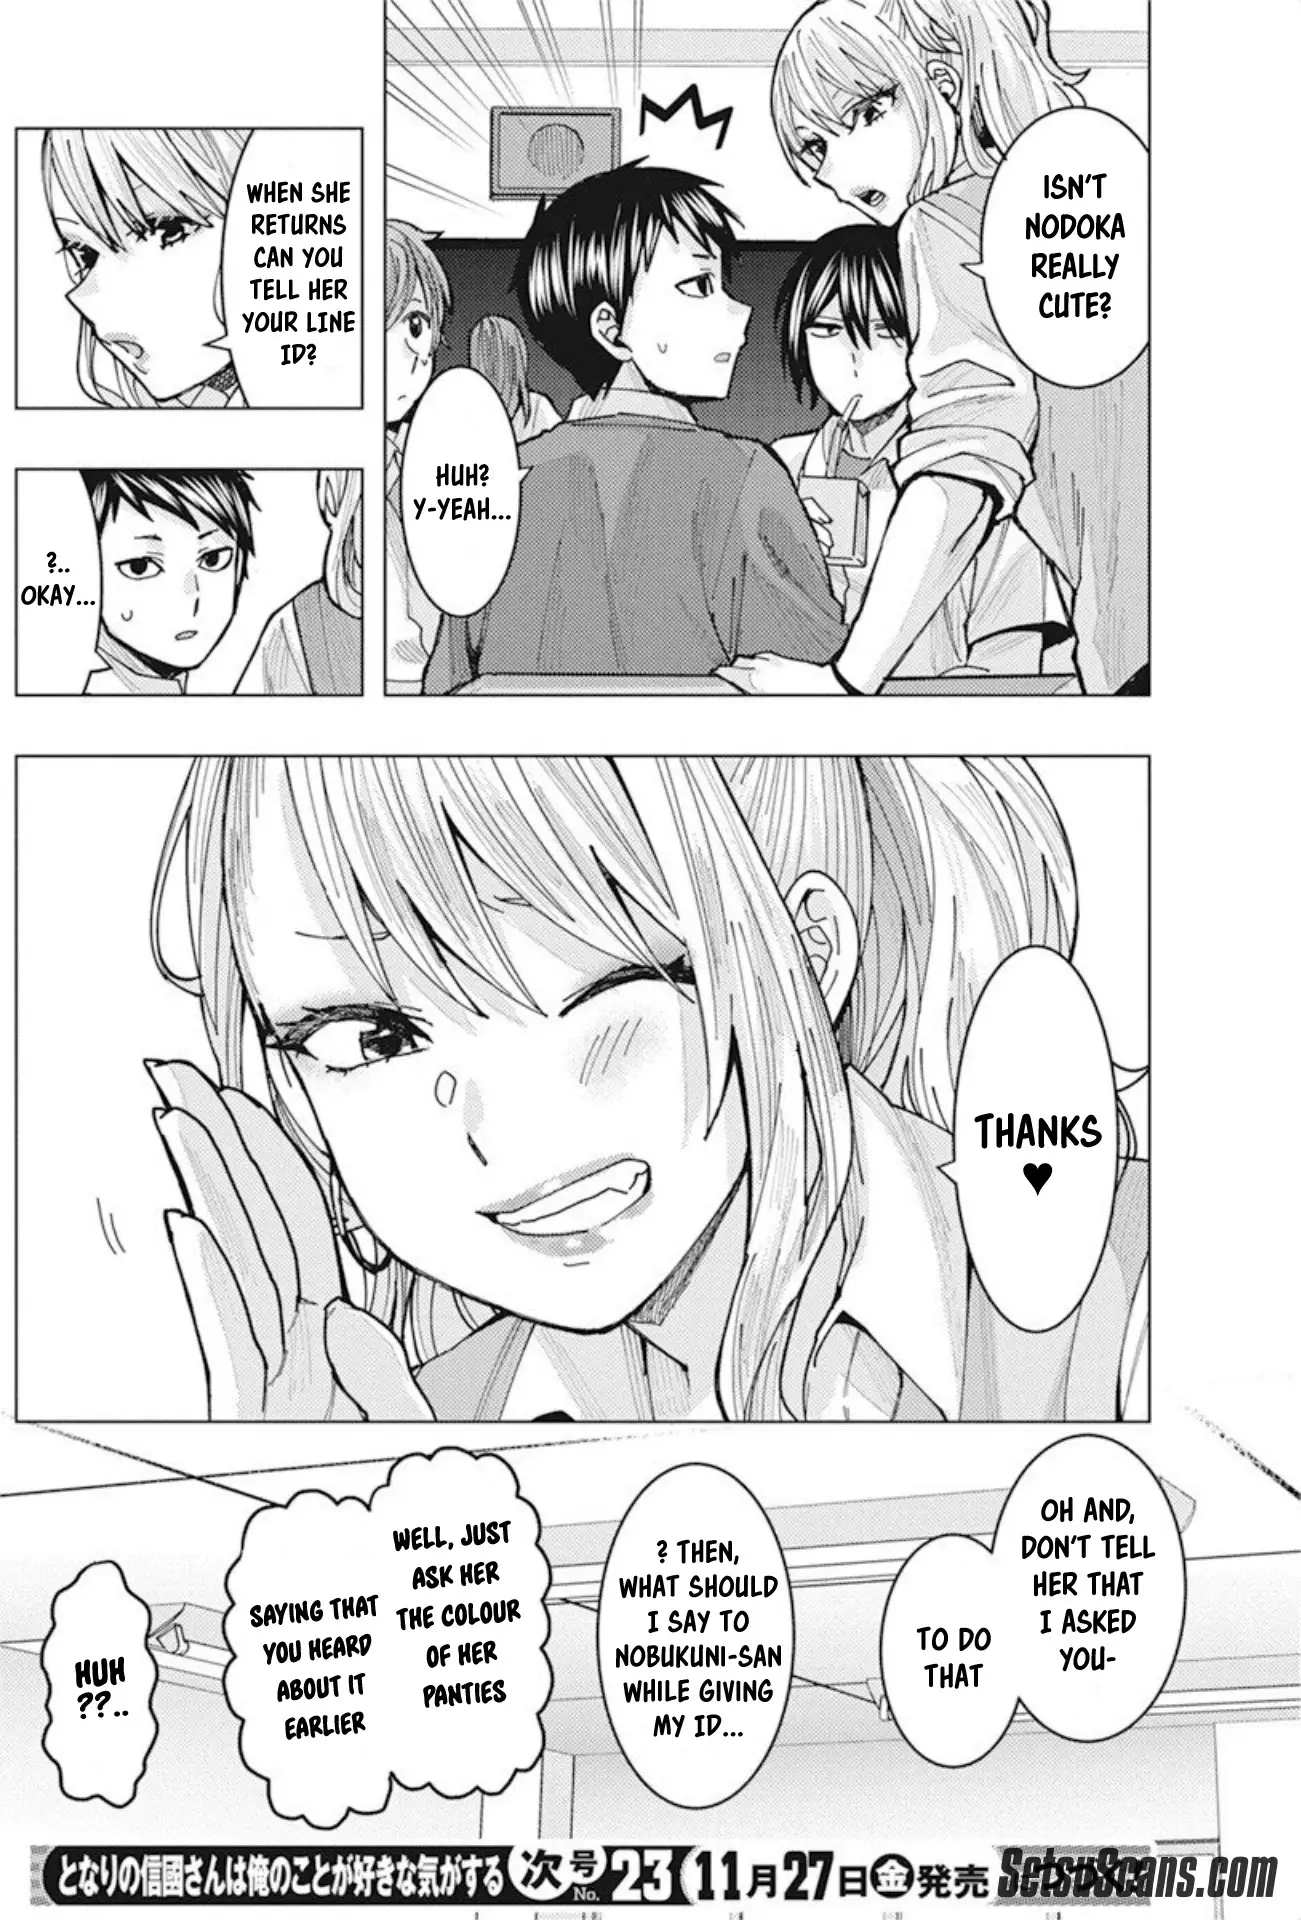 "nobukuni-San" Does She Like Me? - 5 page 16